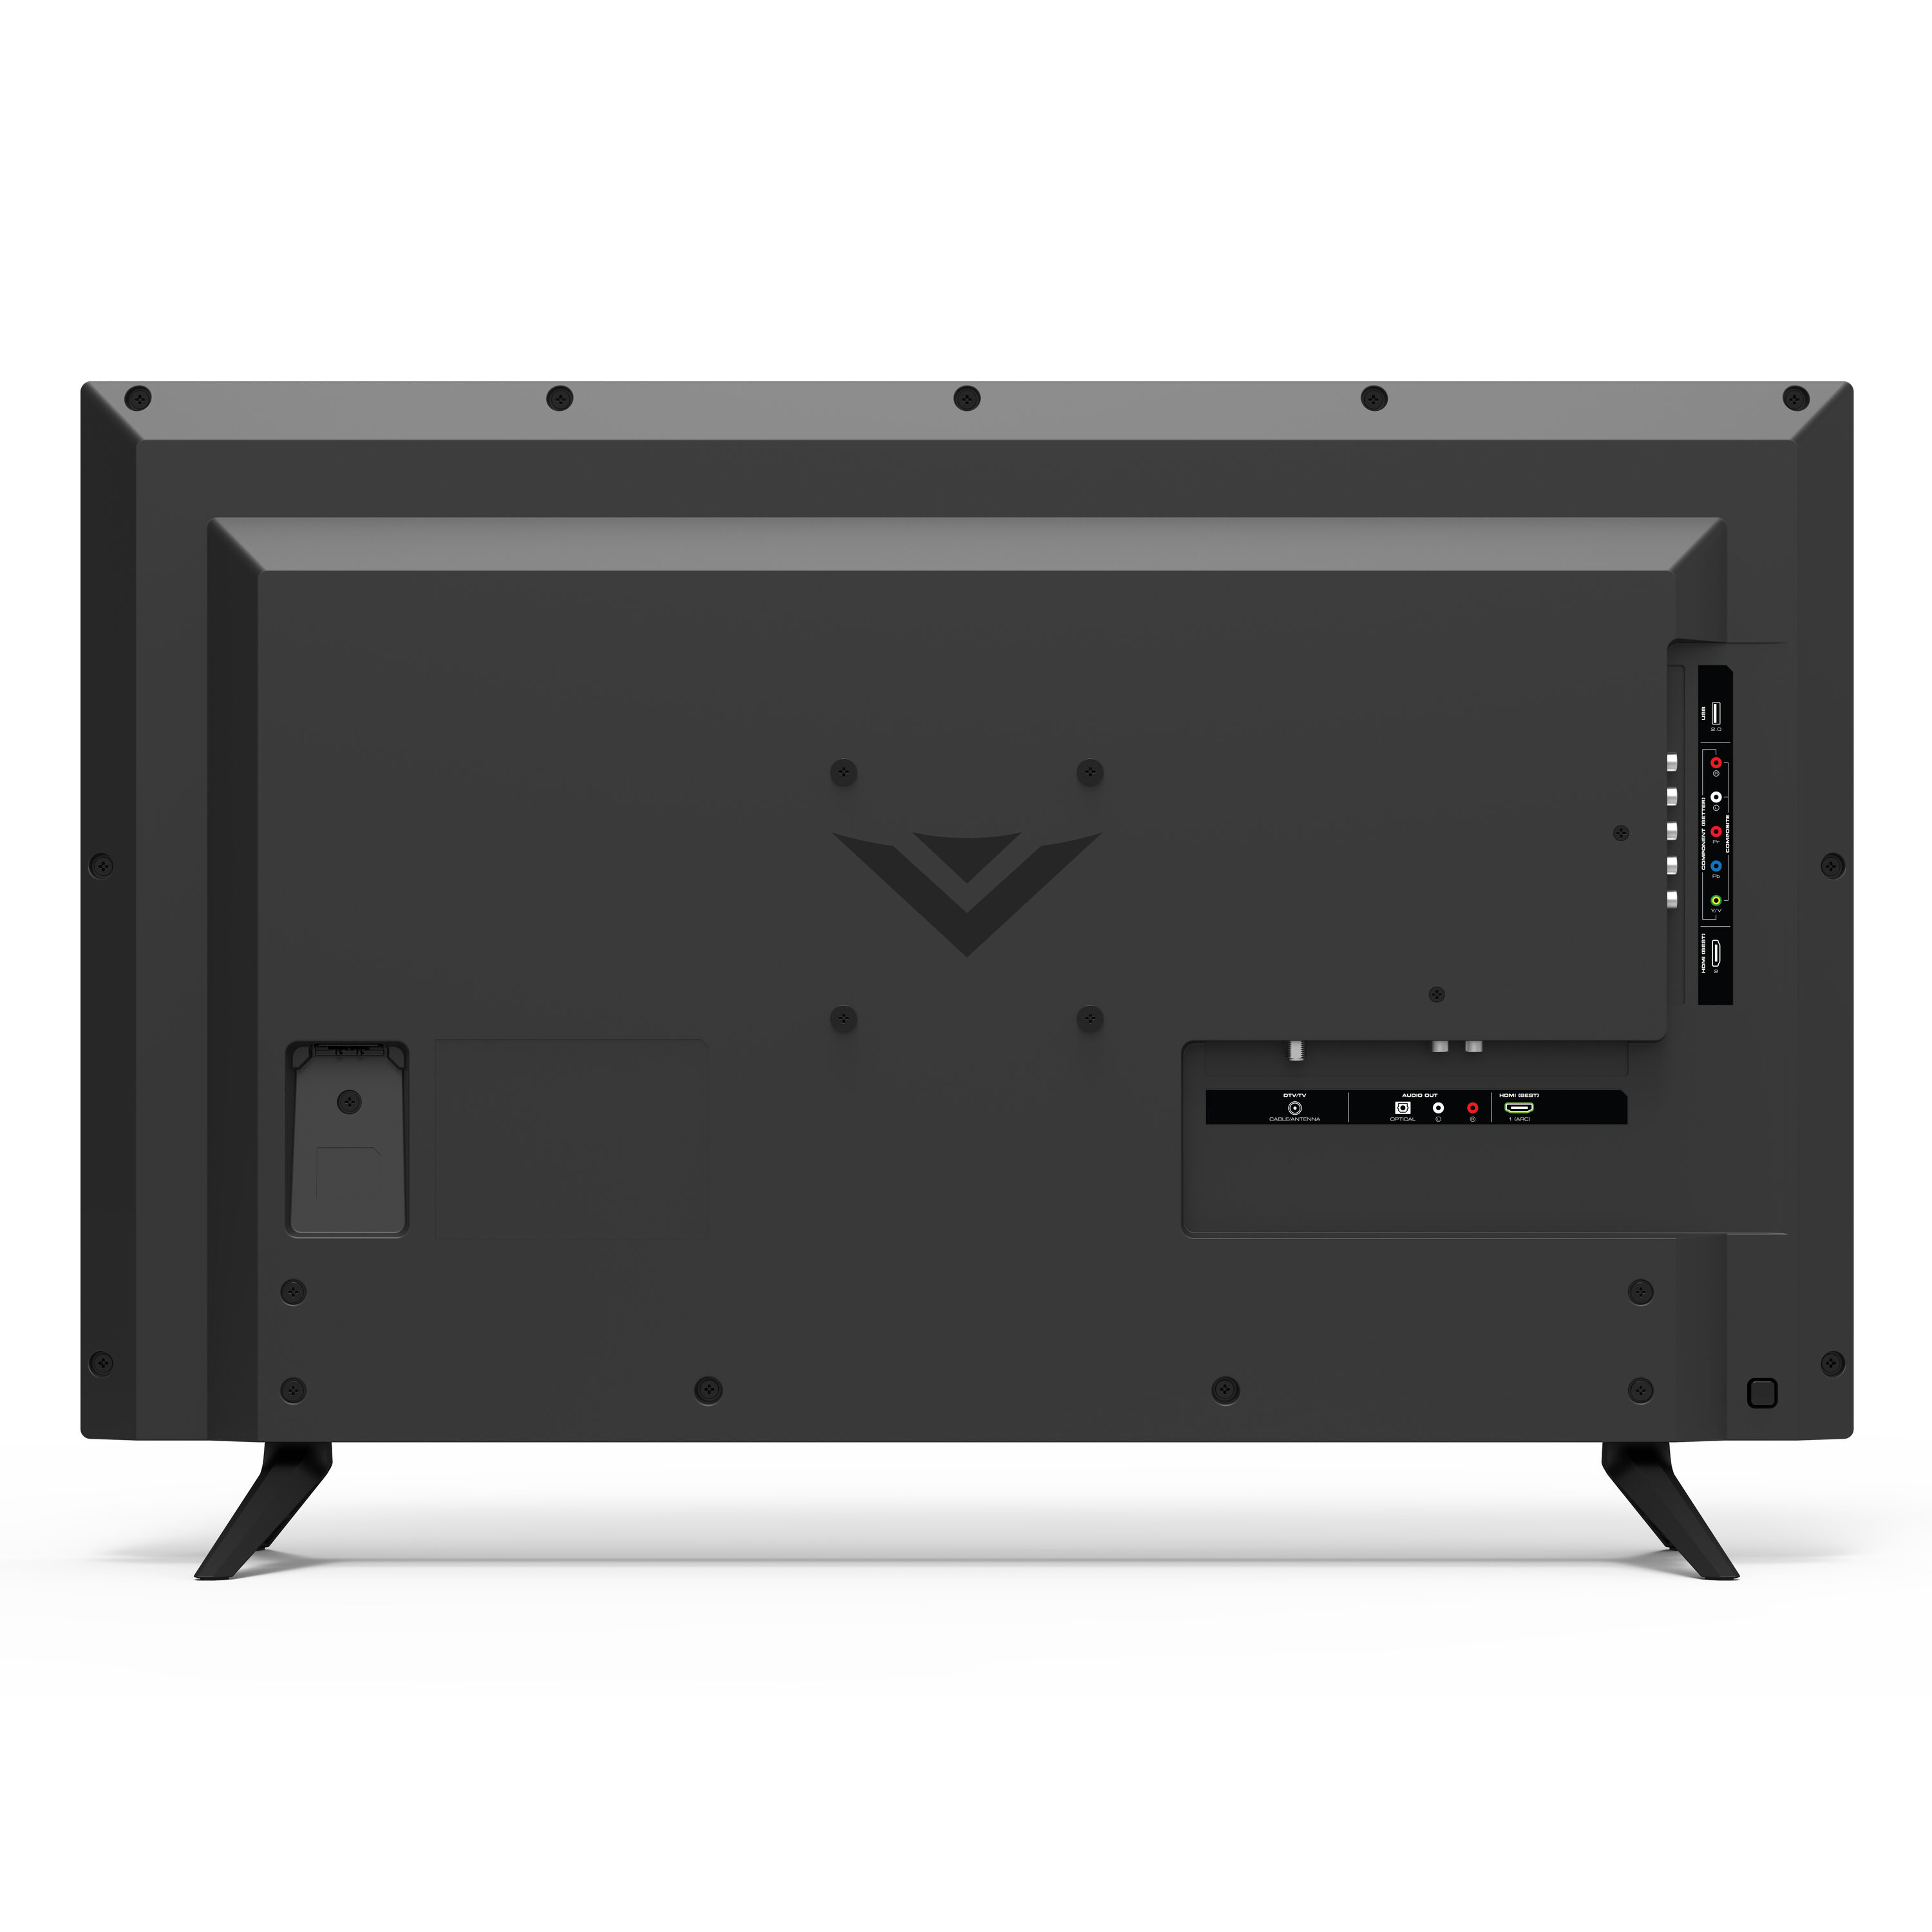 VIZIO 32" Class HD Smart TV D-Series D32h-G9 - image 12 of 21